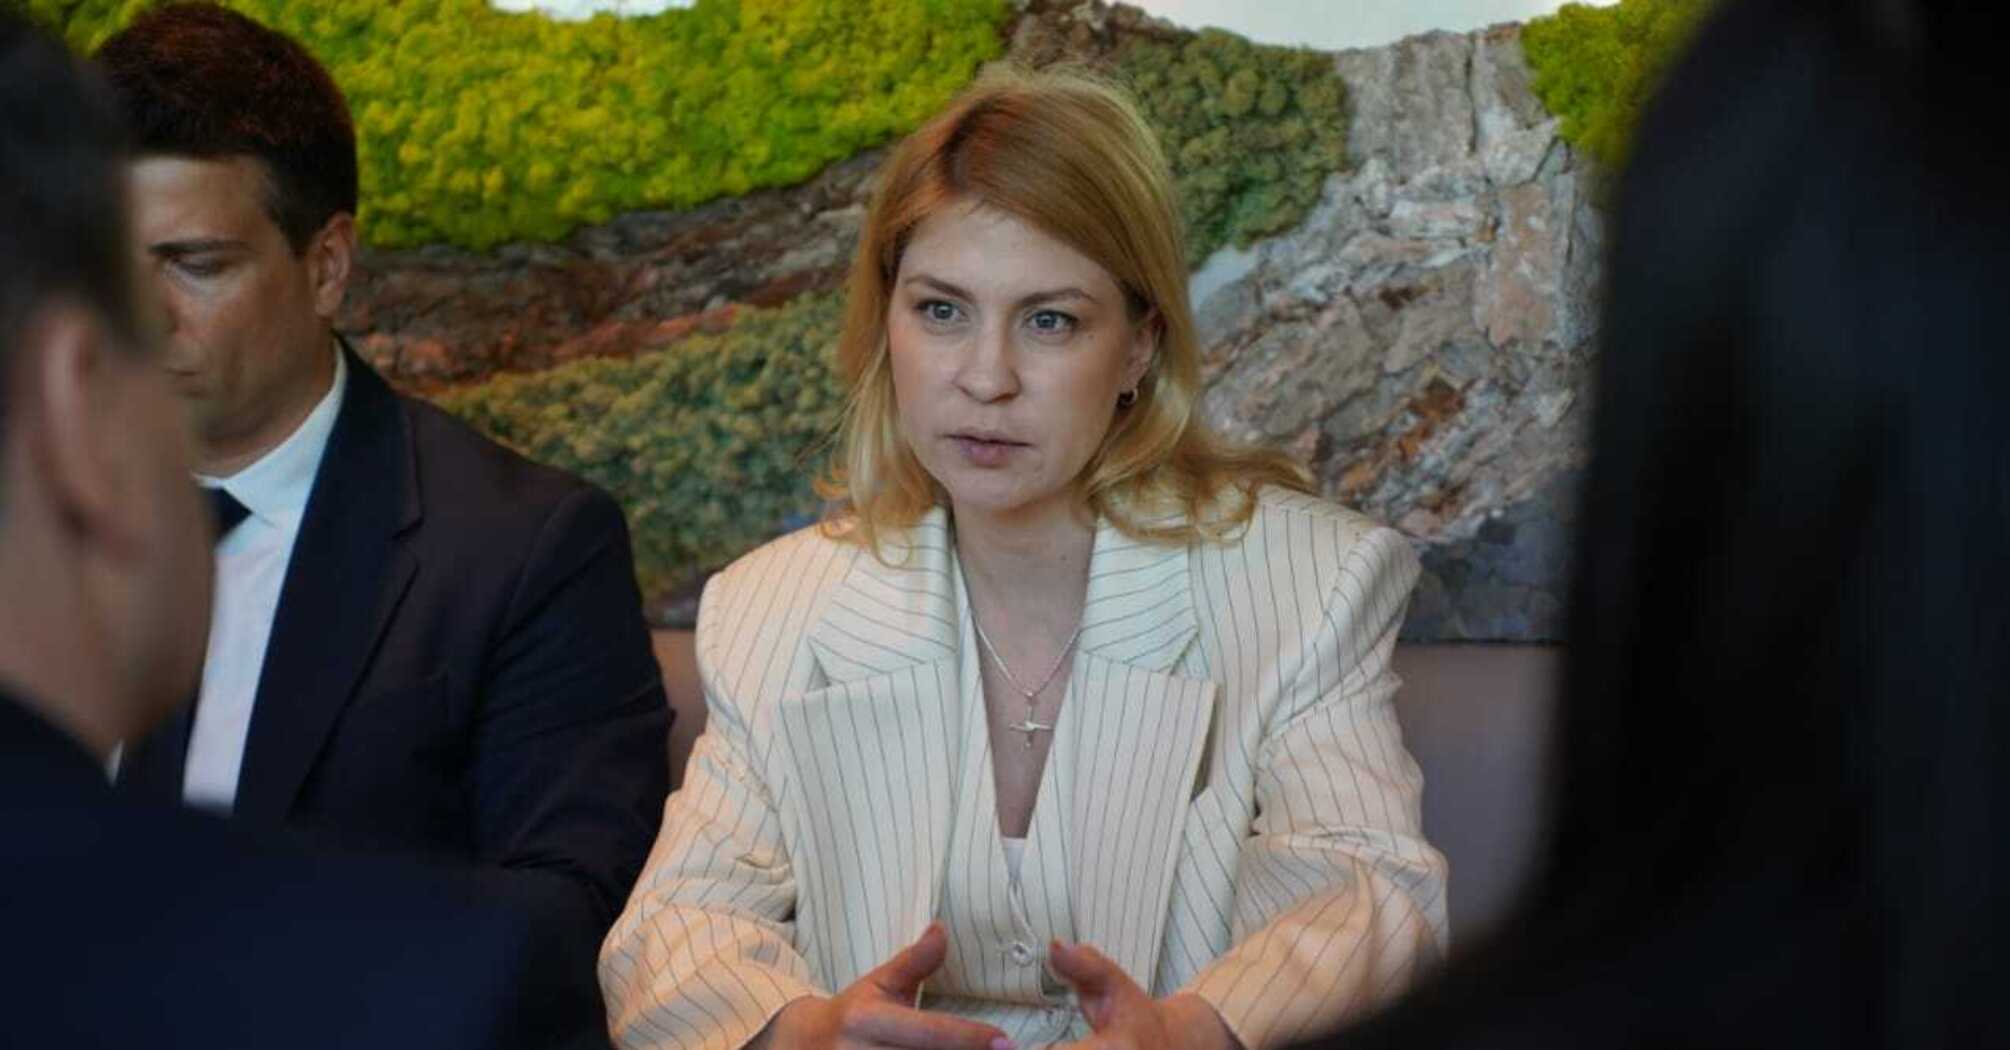 Olha Stefanishyna at the talks with the EU on June 25